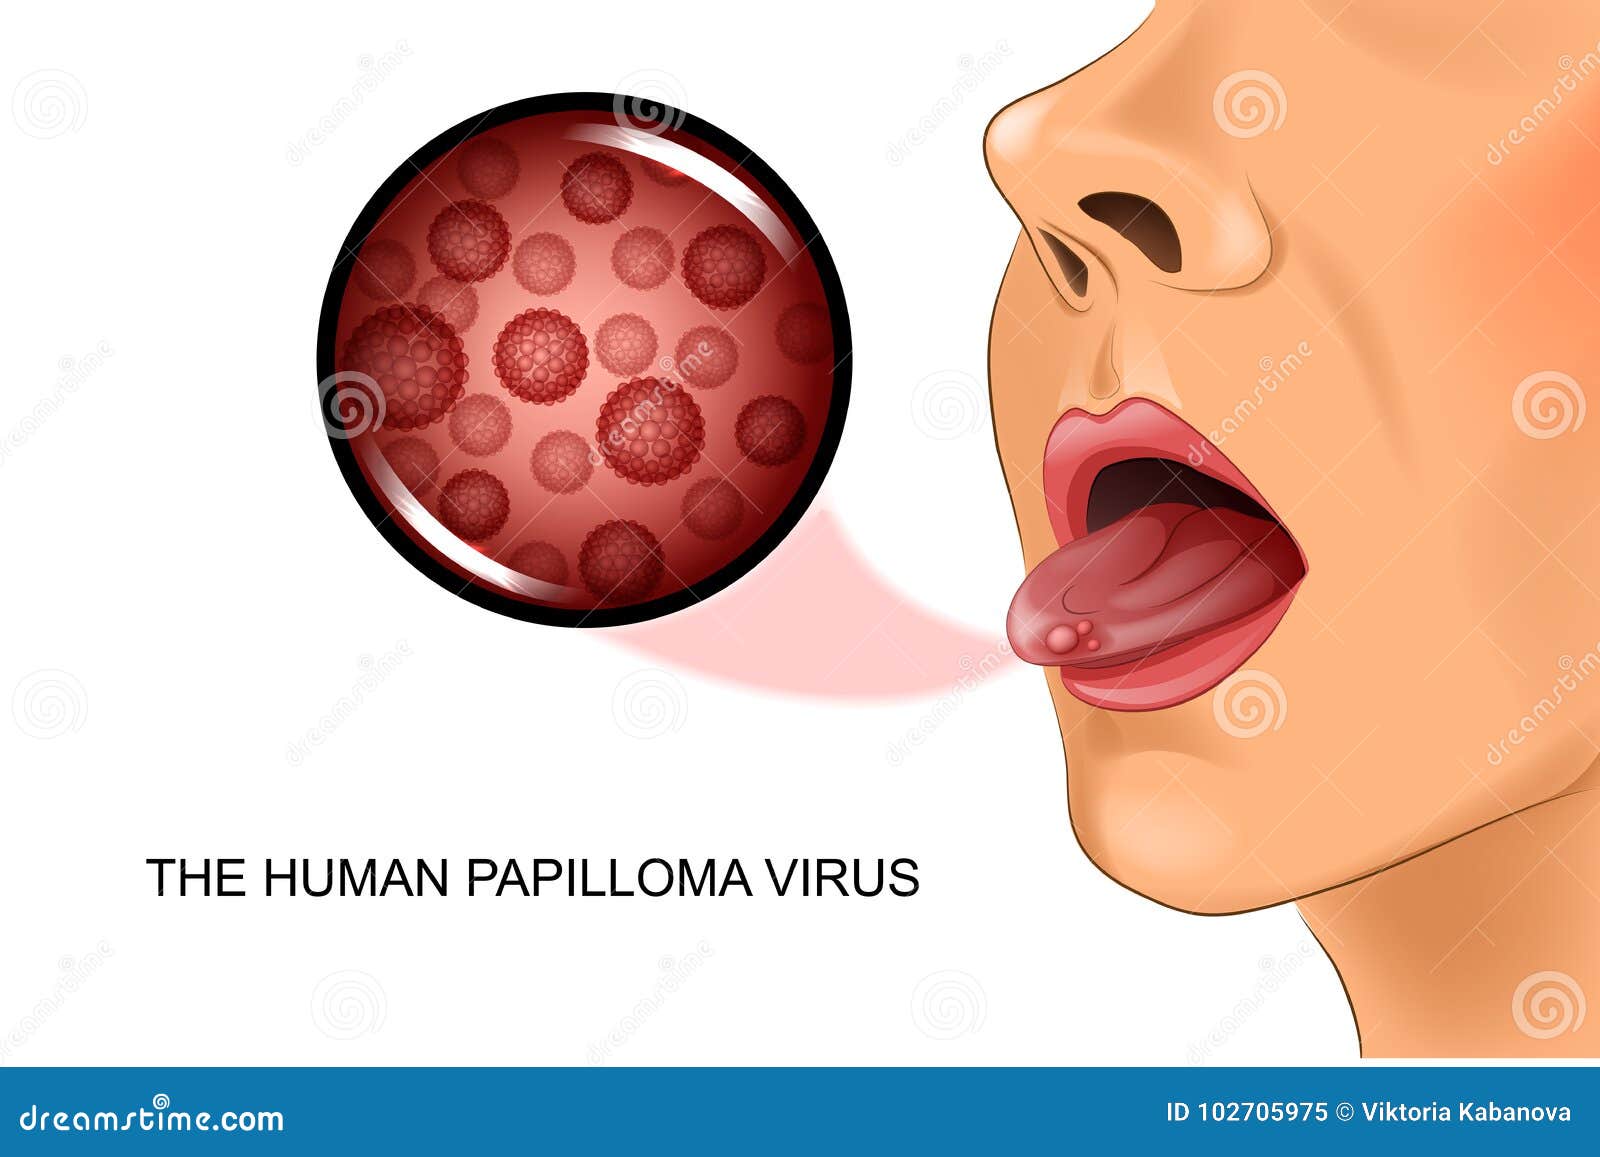 papillomavirus langue symptomes